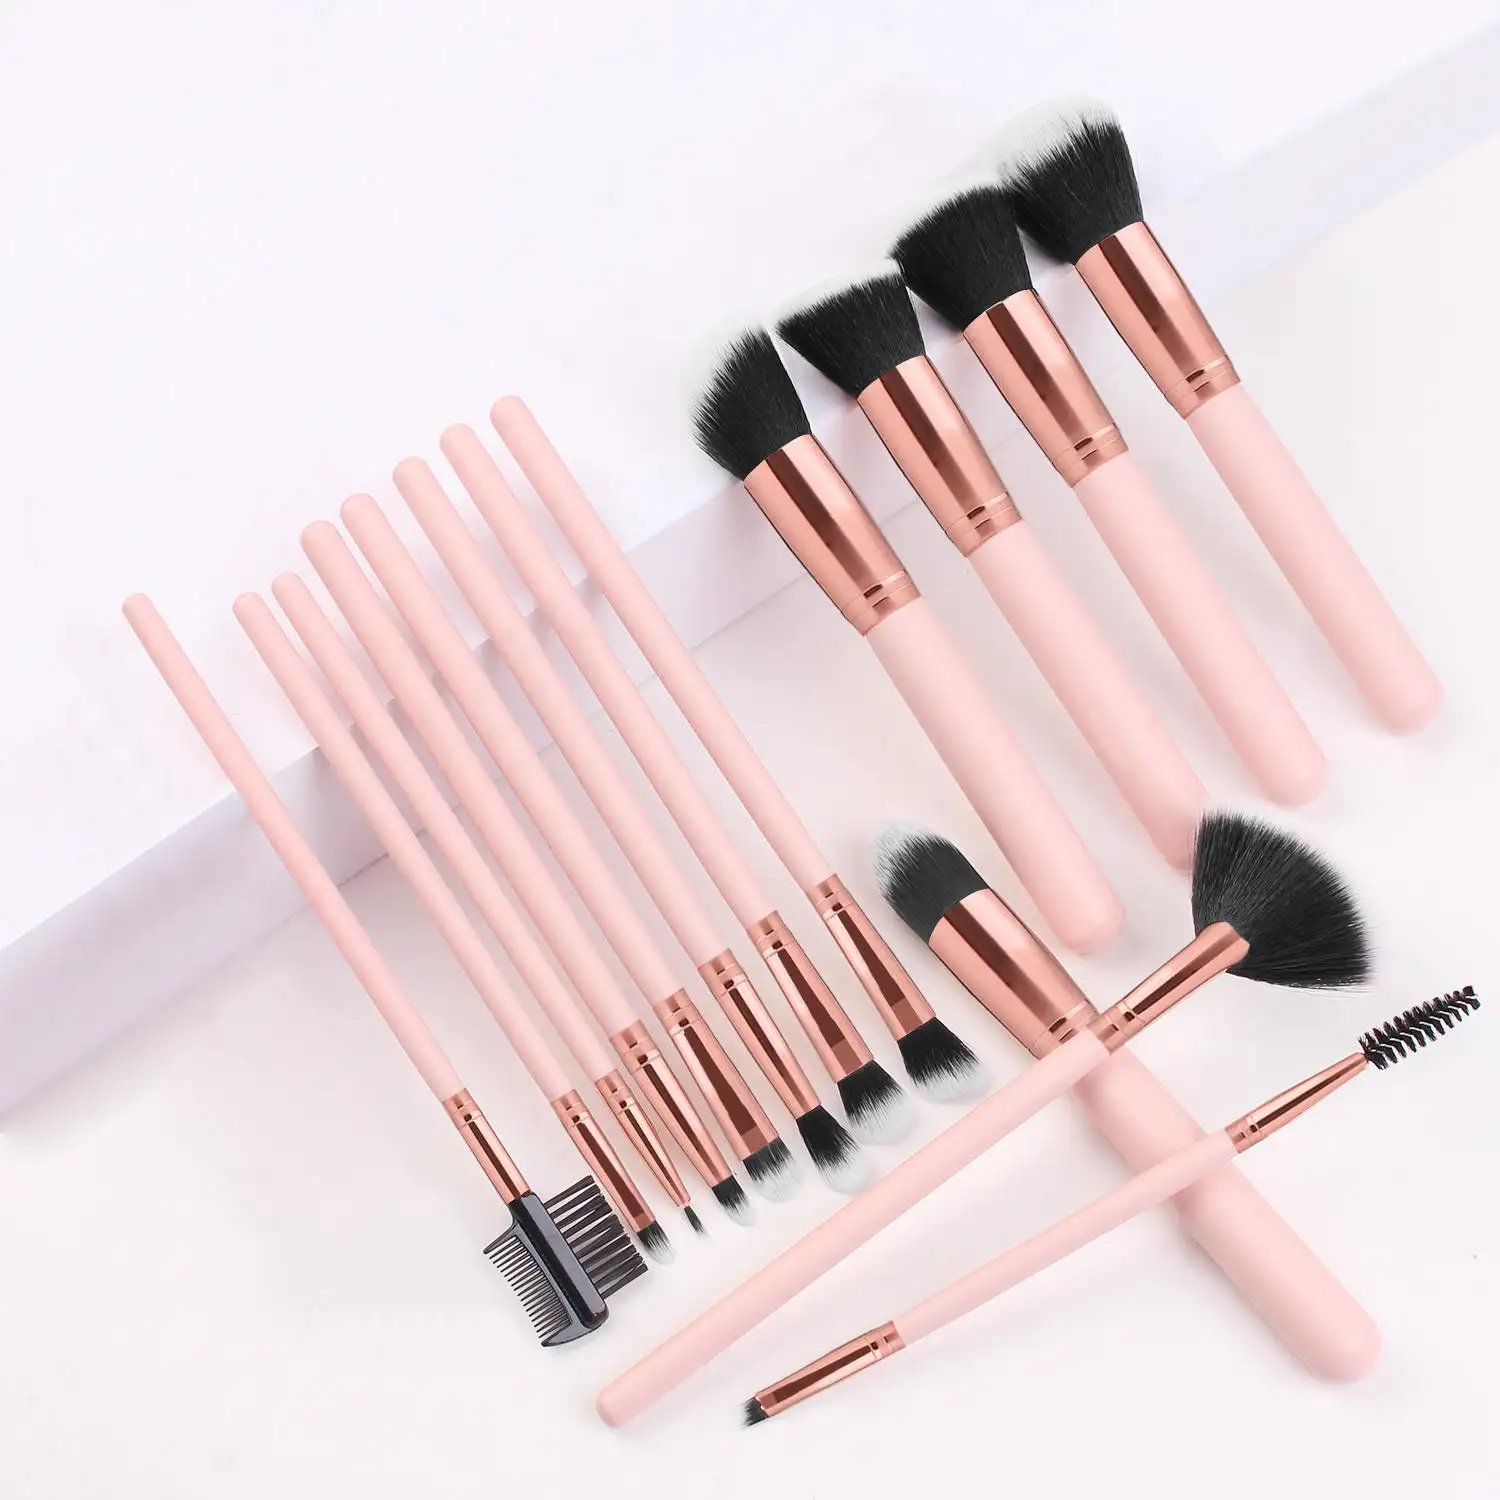 Best Selling Beauty Makeup Tool Makeup Brush Wooden Handle Vegan Friendly Brush Set